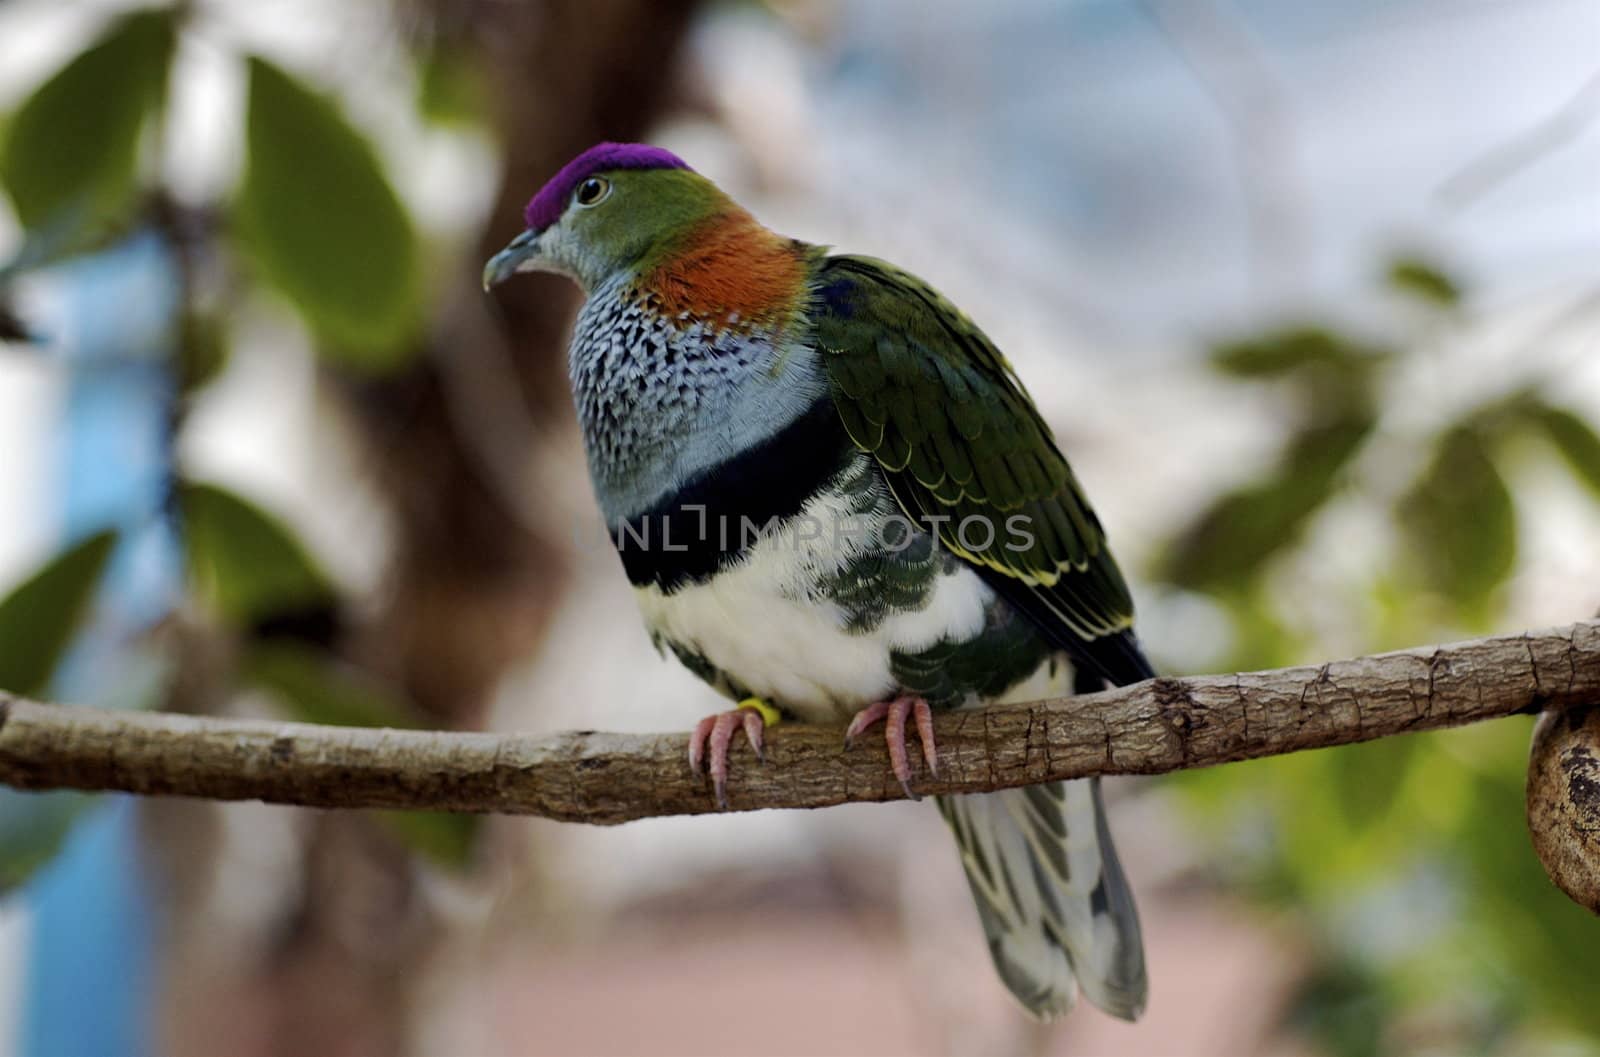 Multicolored Tropical Bird by PrincessToula